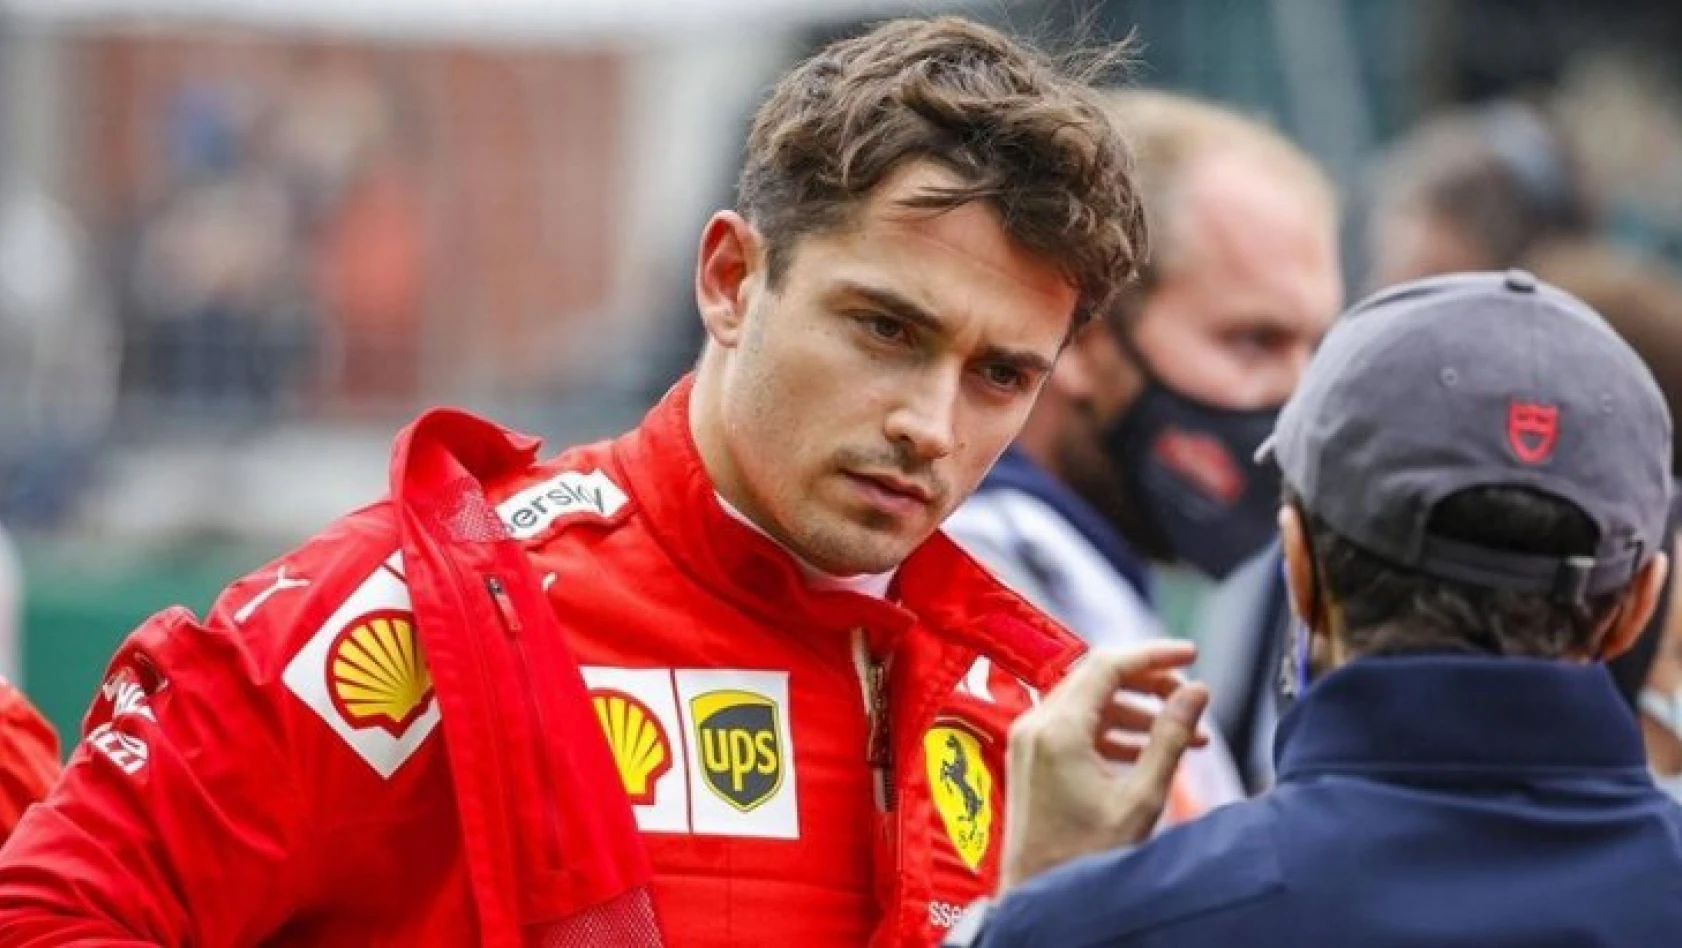 Ferrari pilotu Charles Leclerc, korona virüse yakalandı